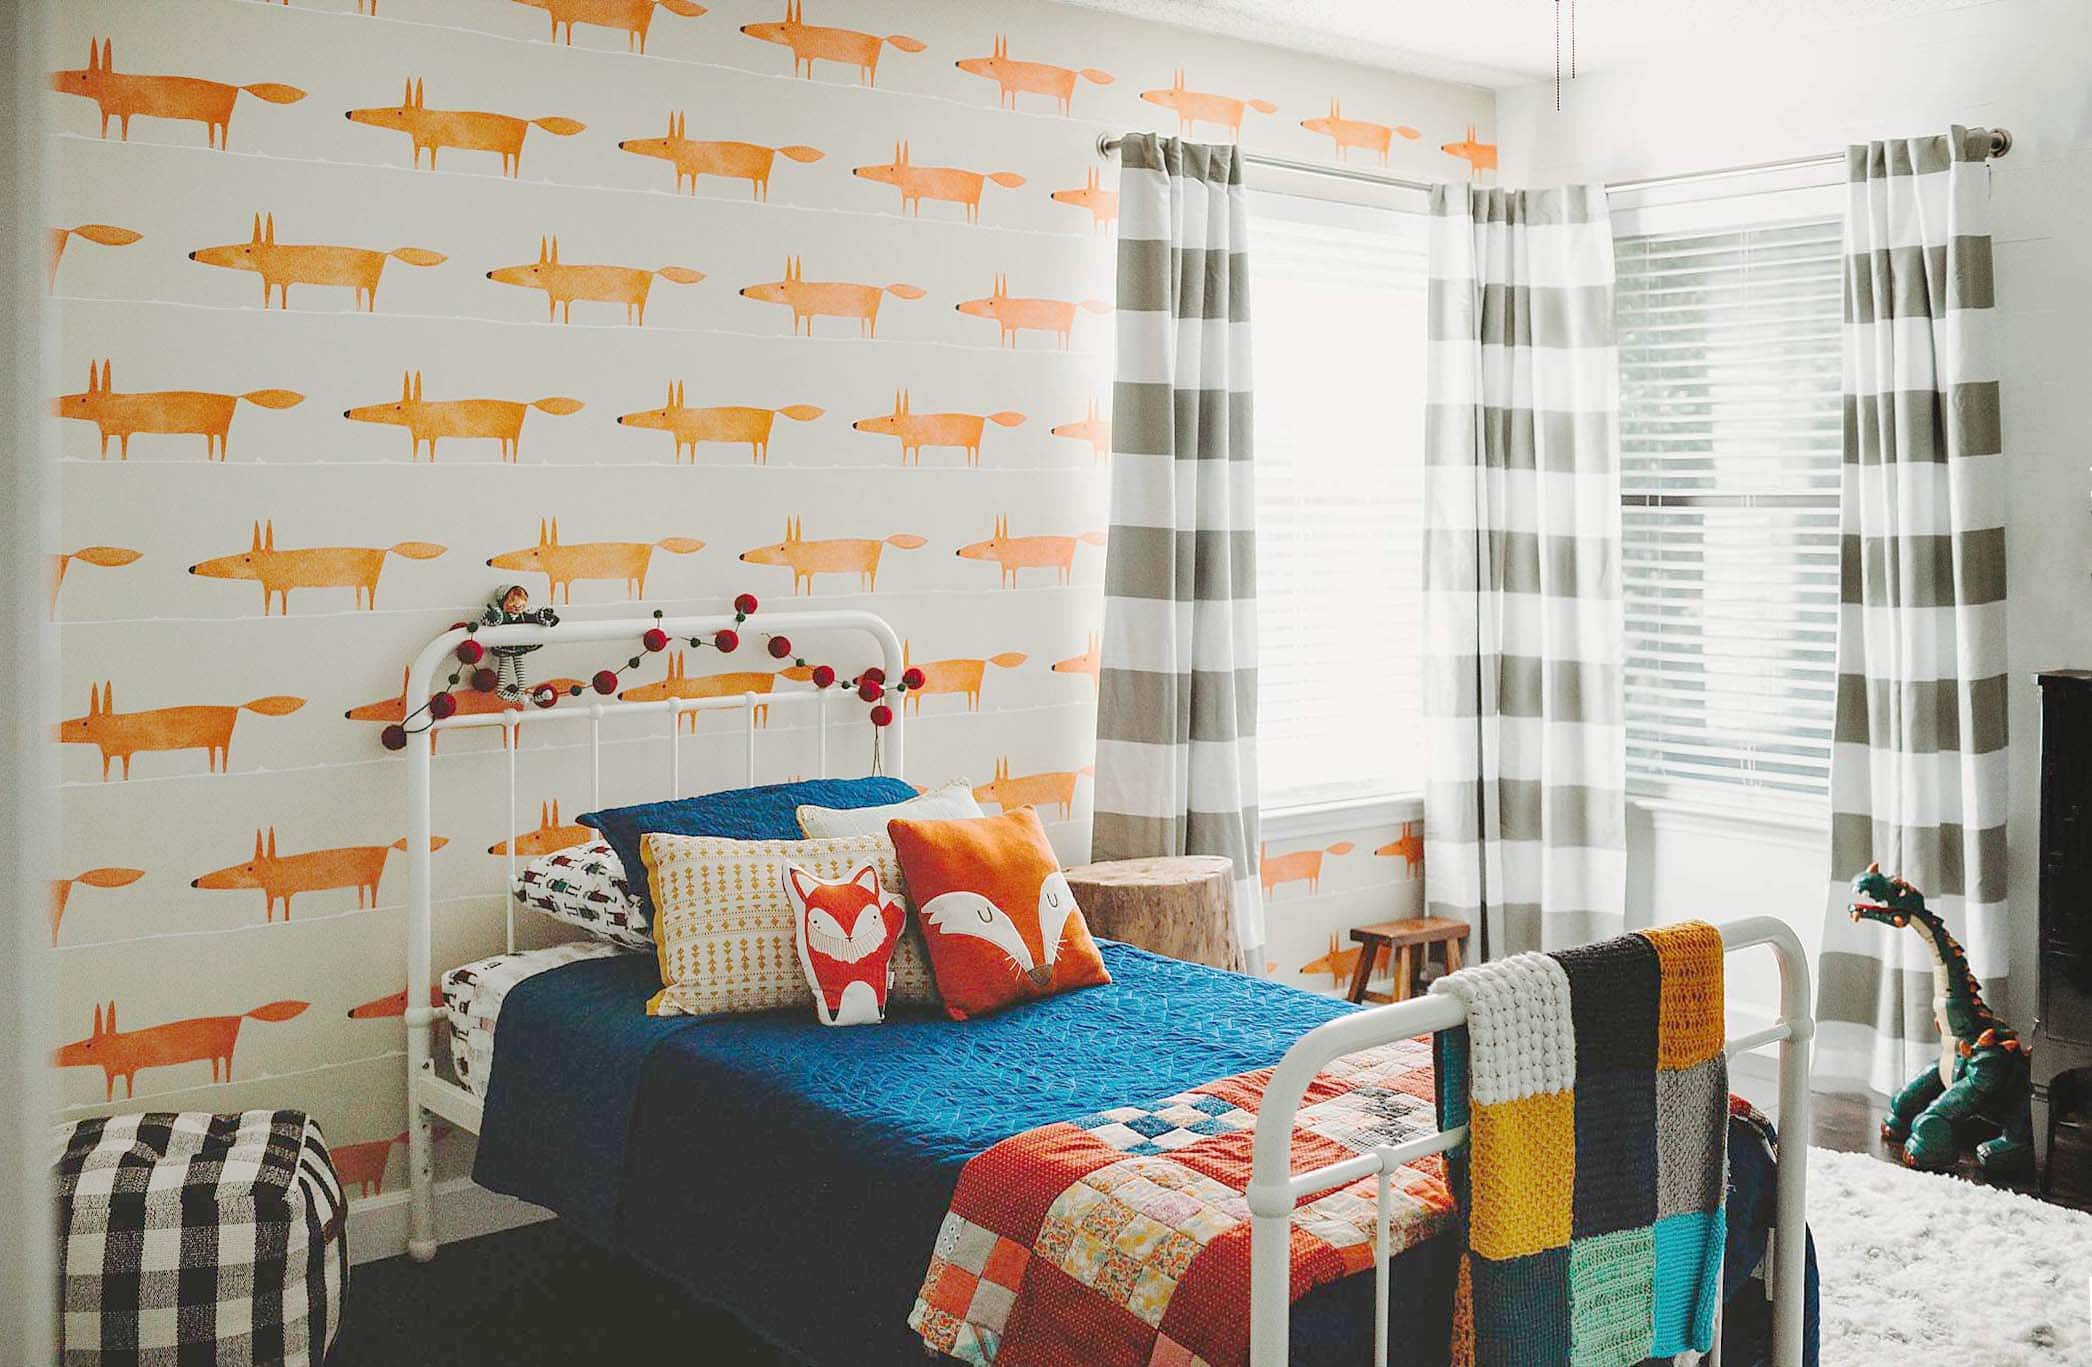 Orange fox wallpaper in kids boys bedroom, headboard wall installation